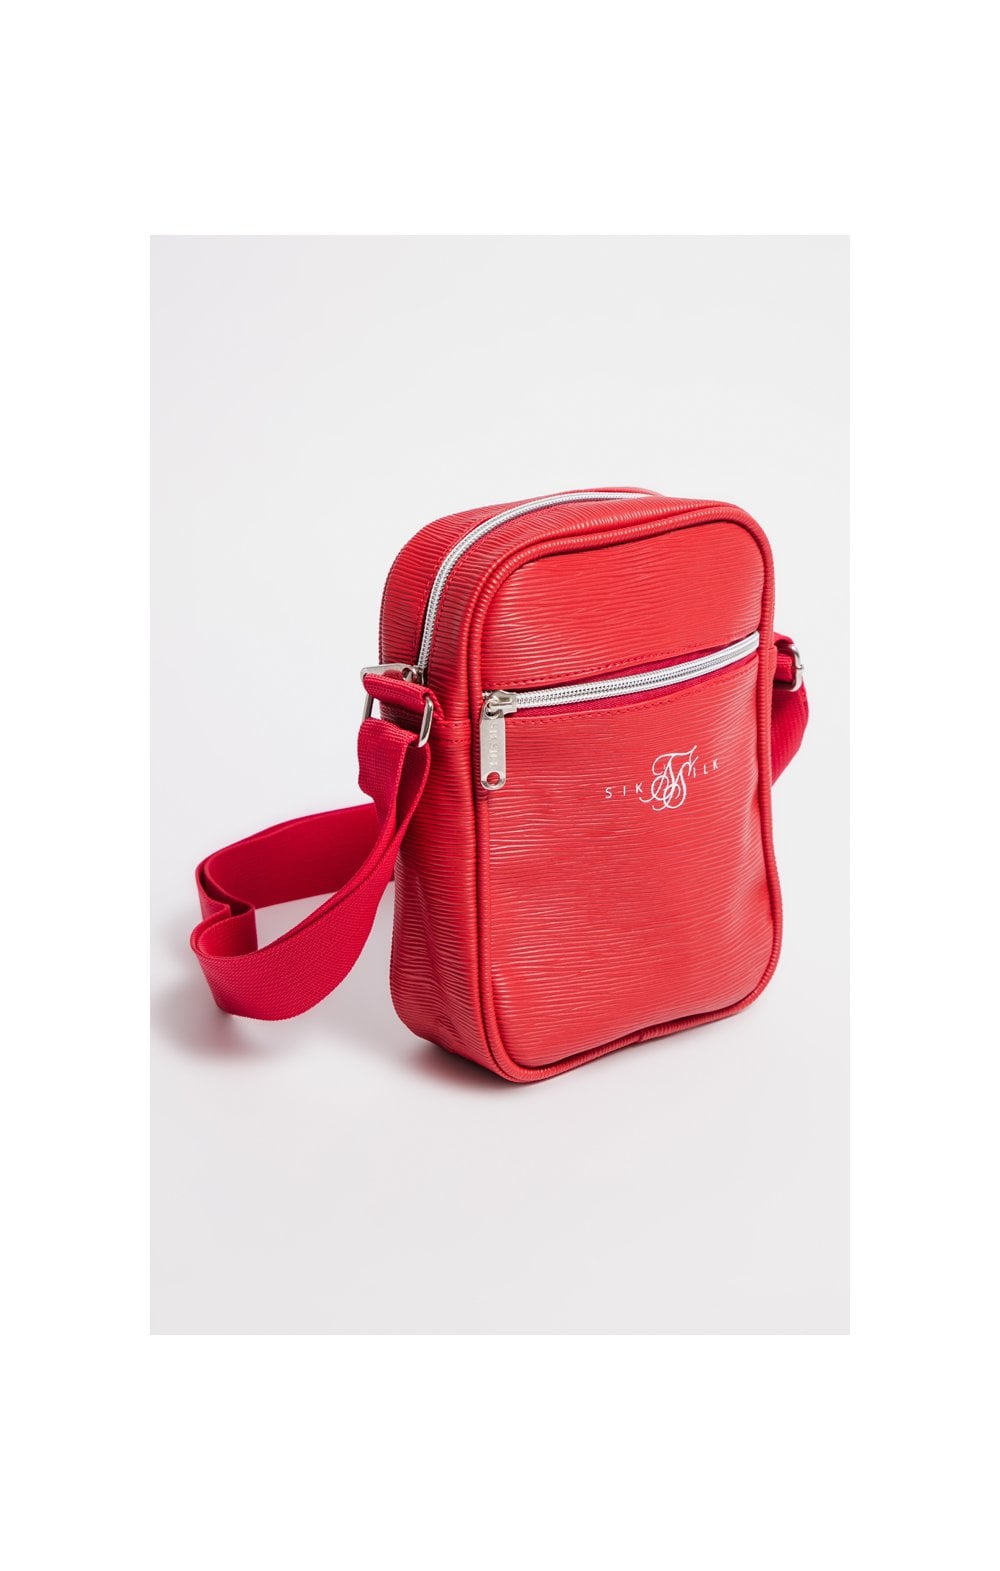 SikSilk Crossbody Bag - Red (2)